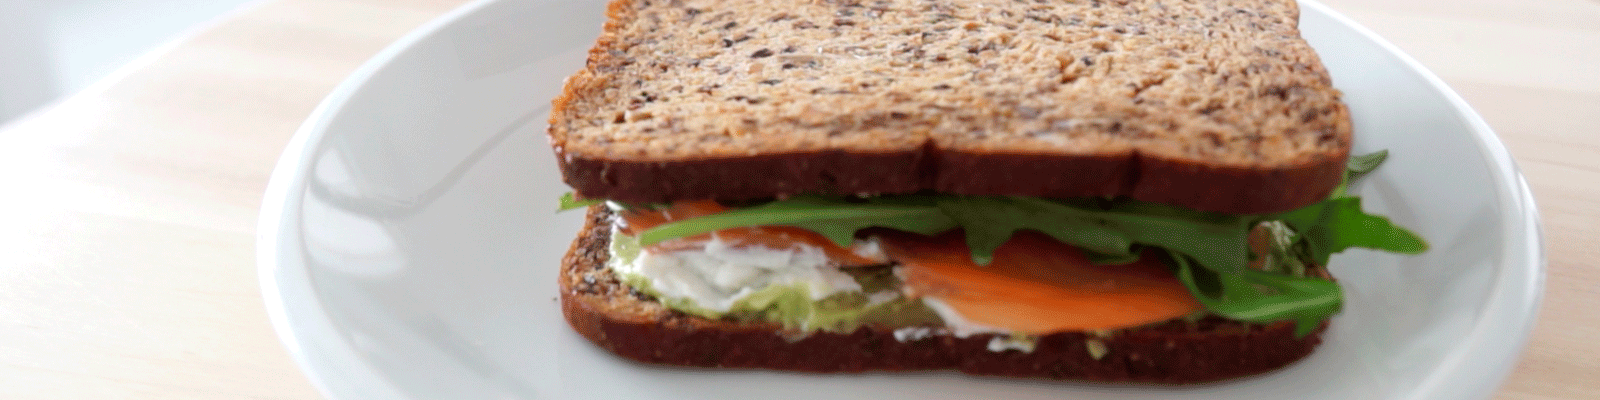 Healthy Low Carb Sandwich